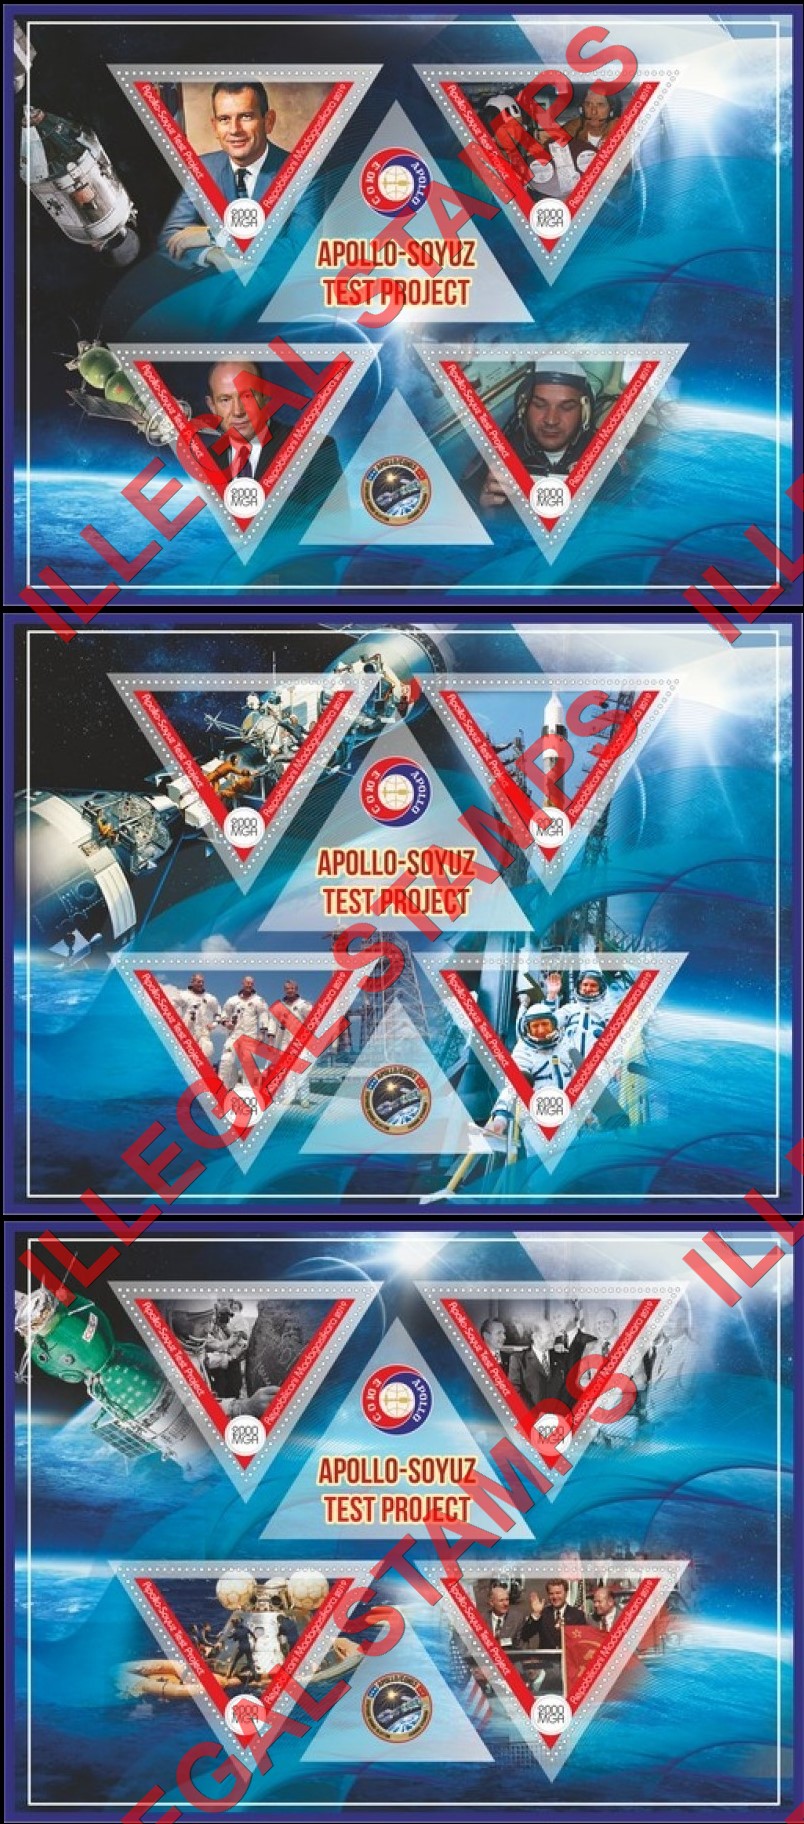 Madagascar 2019 Apollo-Soyuz Test Project Illegal Stamp Souvenir Sheets of 4 (Part 2)